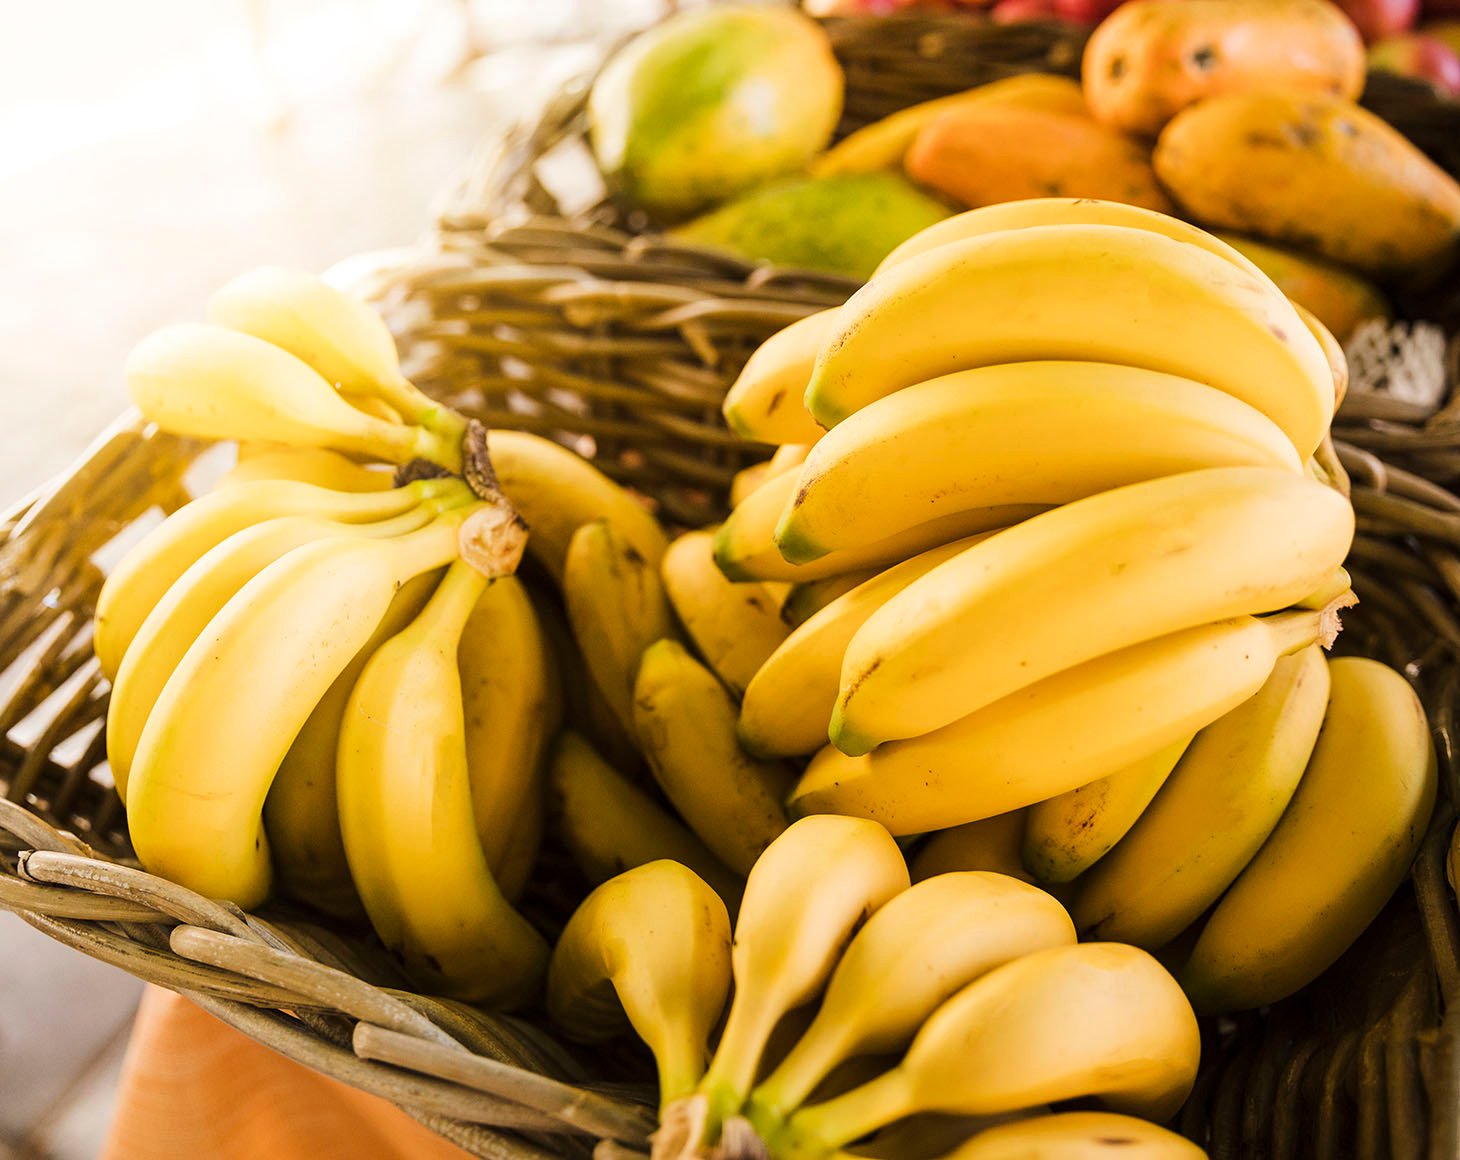 ripe-yellow-bananas-wicker-basket-fruit-market-store